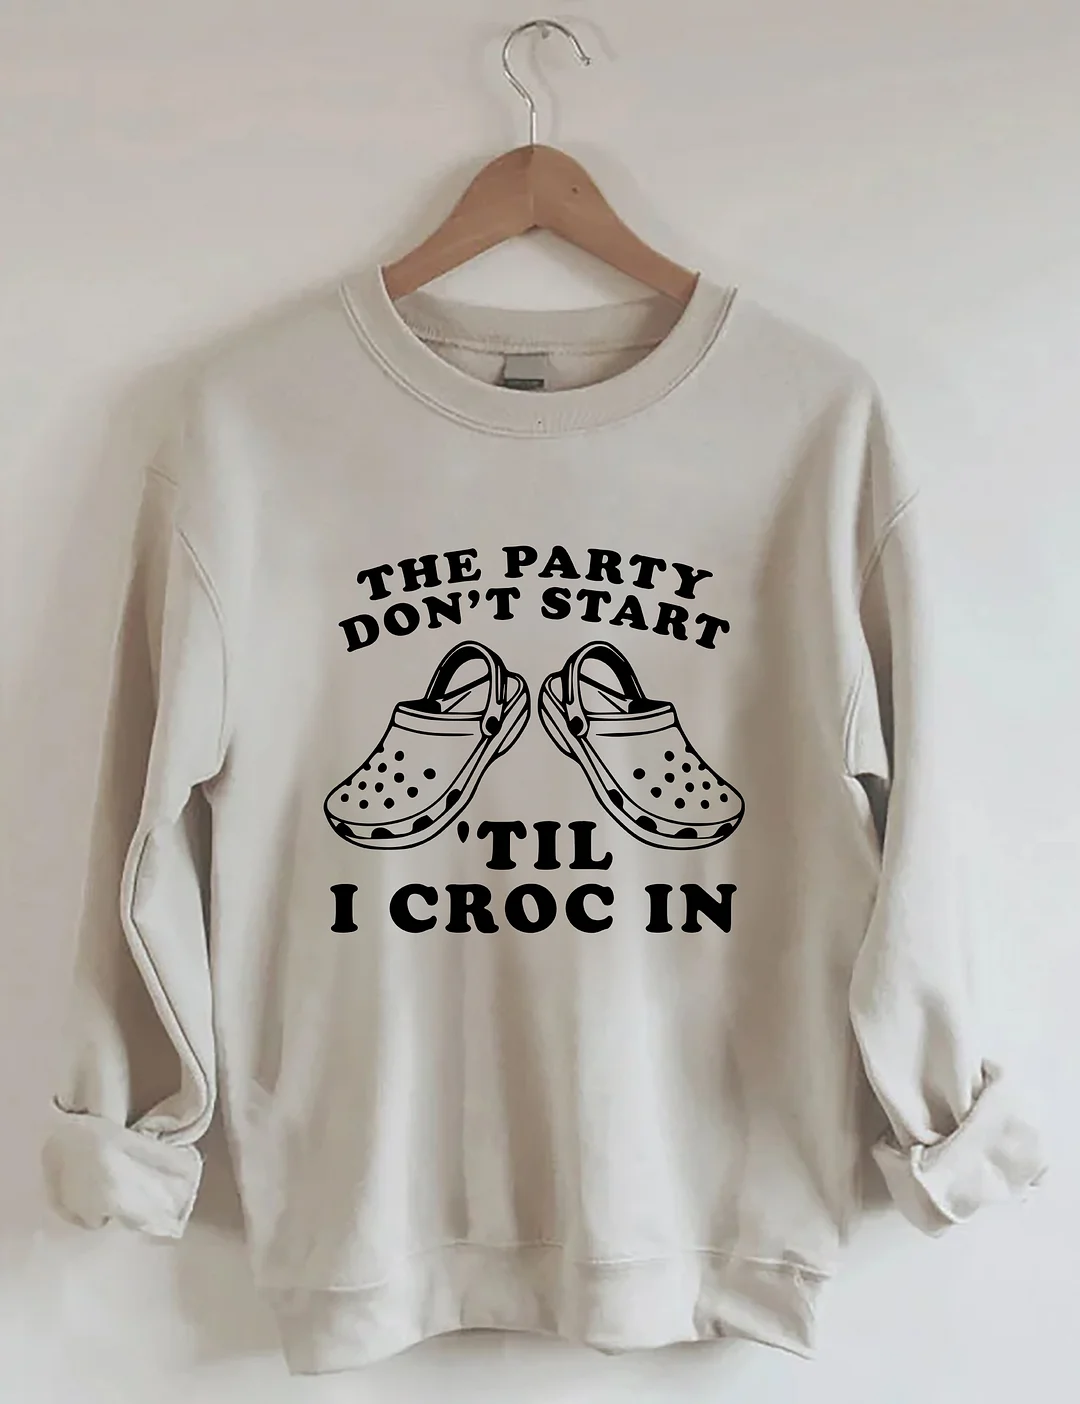 The Party Don't Start Til I Croc In Sweatshirt